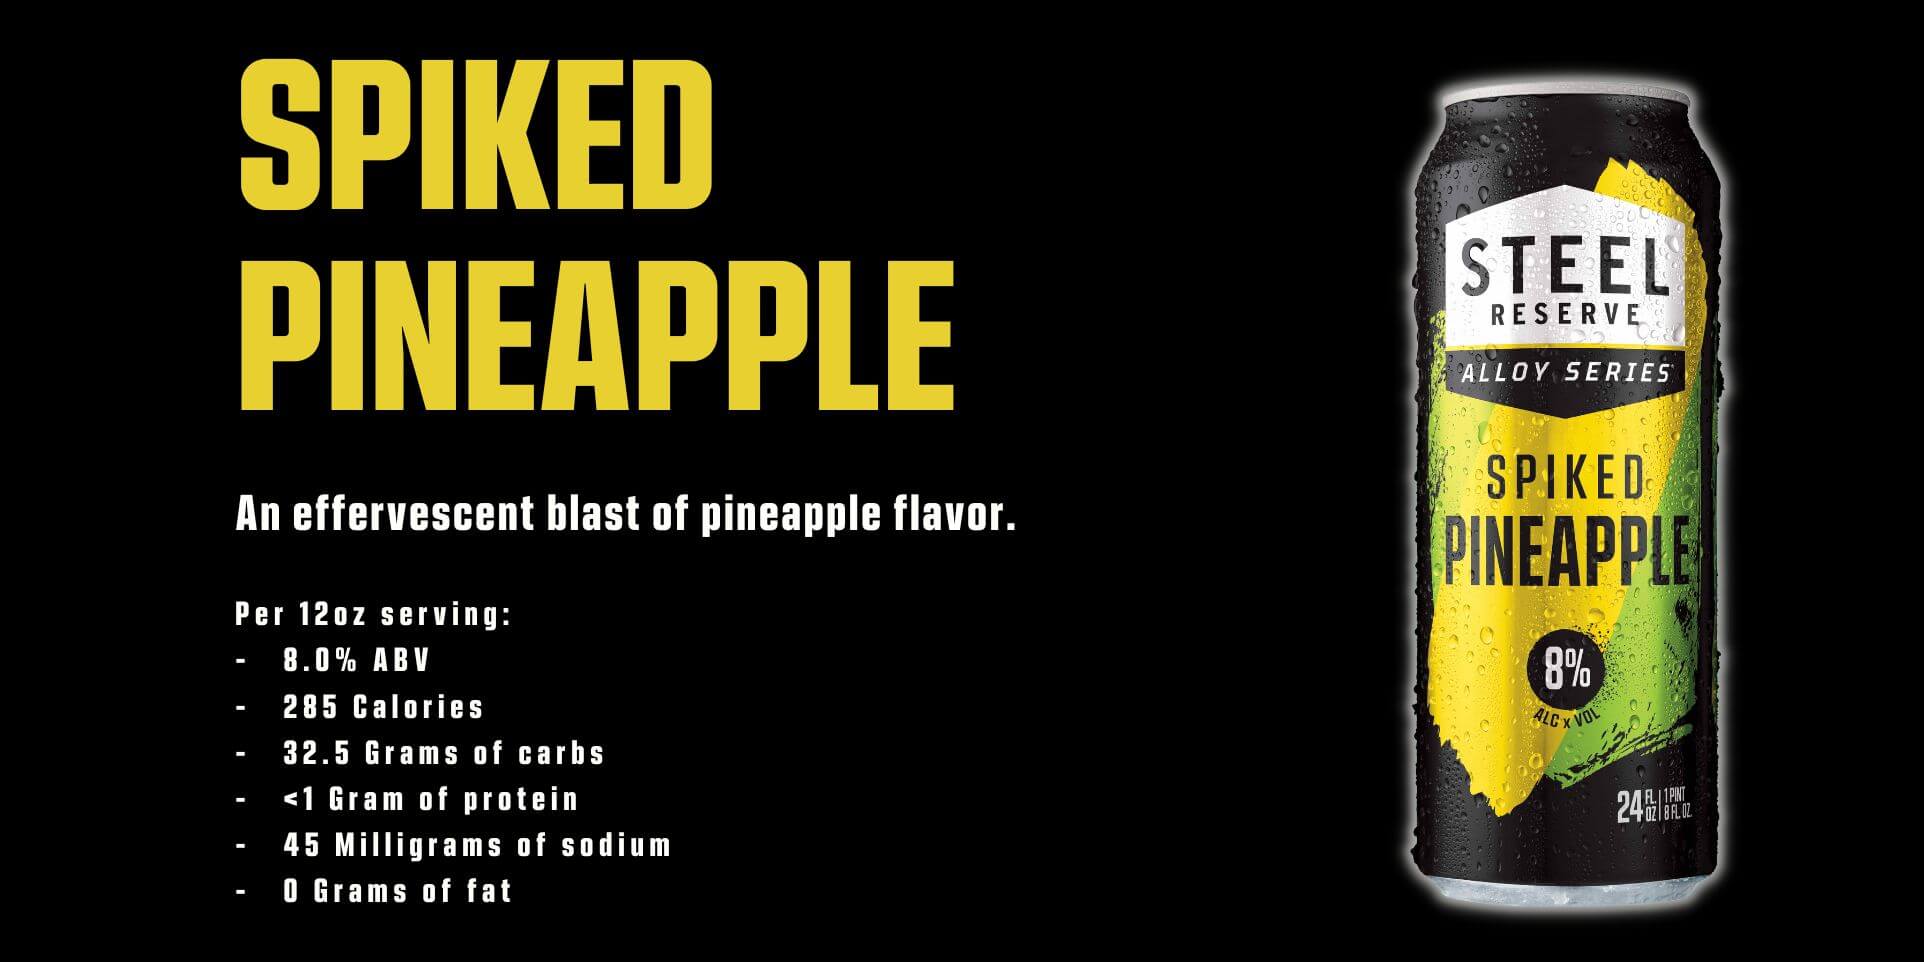 Spiked Pineapple description